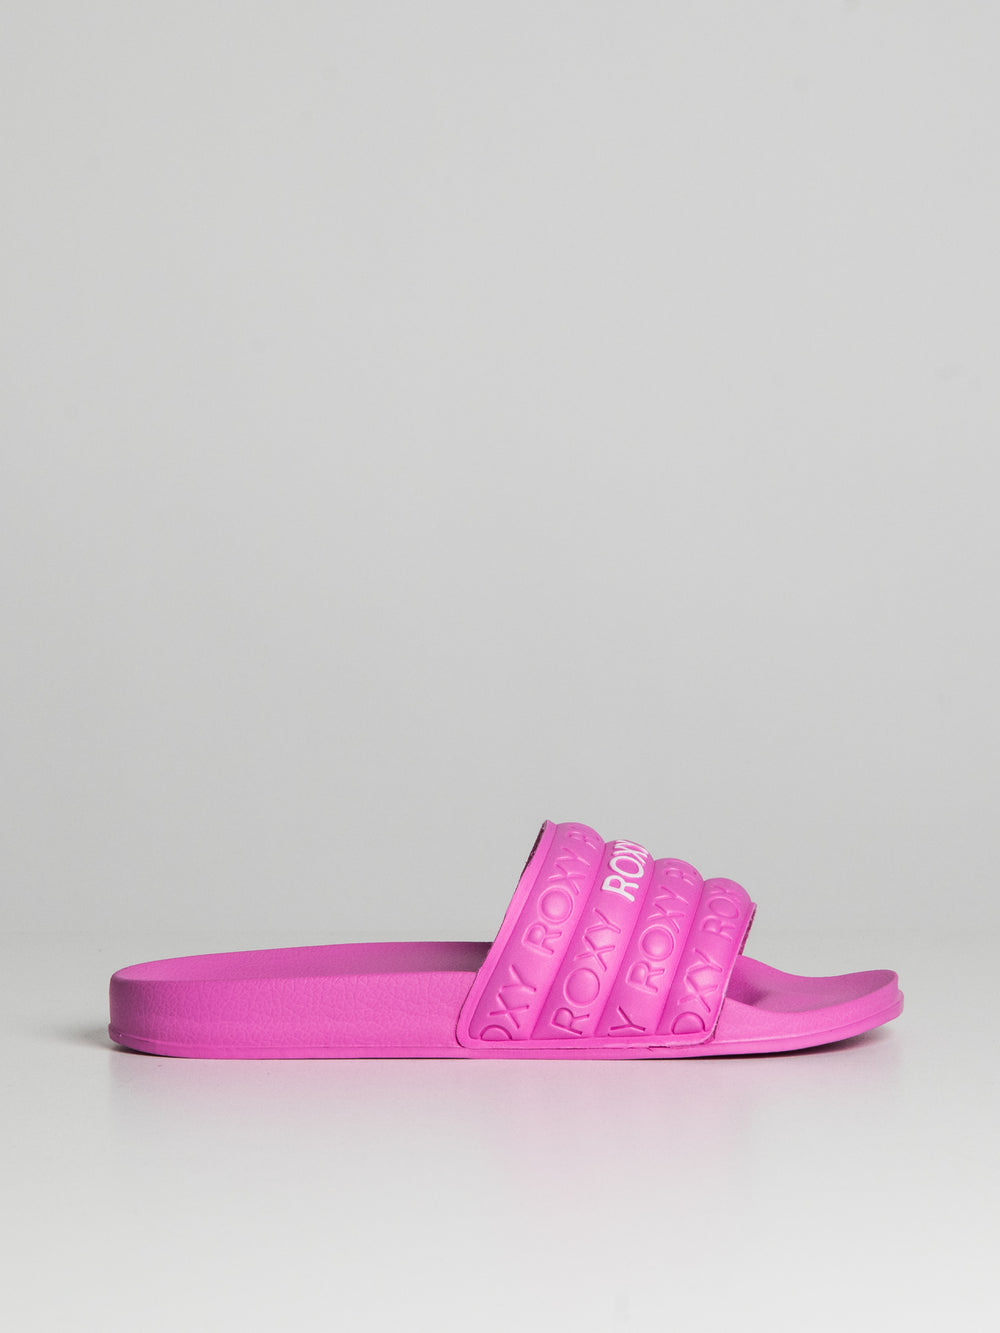 Roxy Womens Slippy Braided Water-Friendly Sandals - Tan | SurfStitch